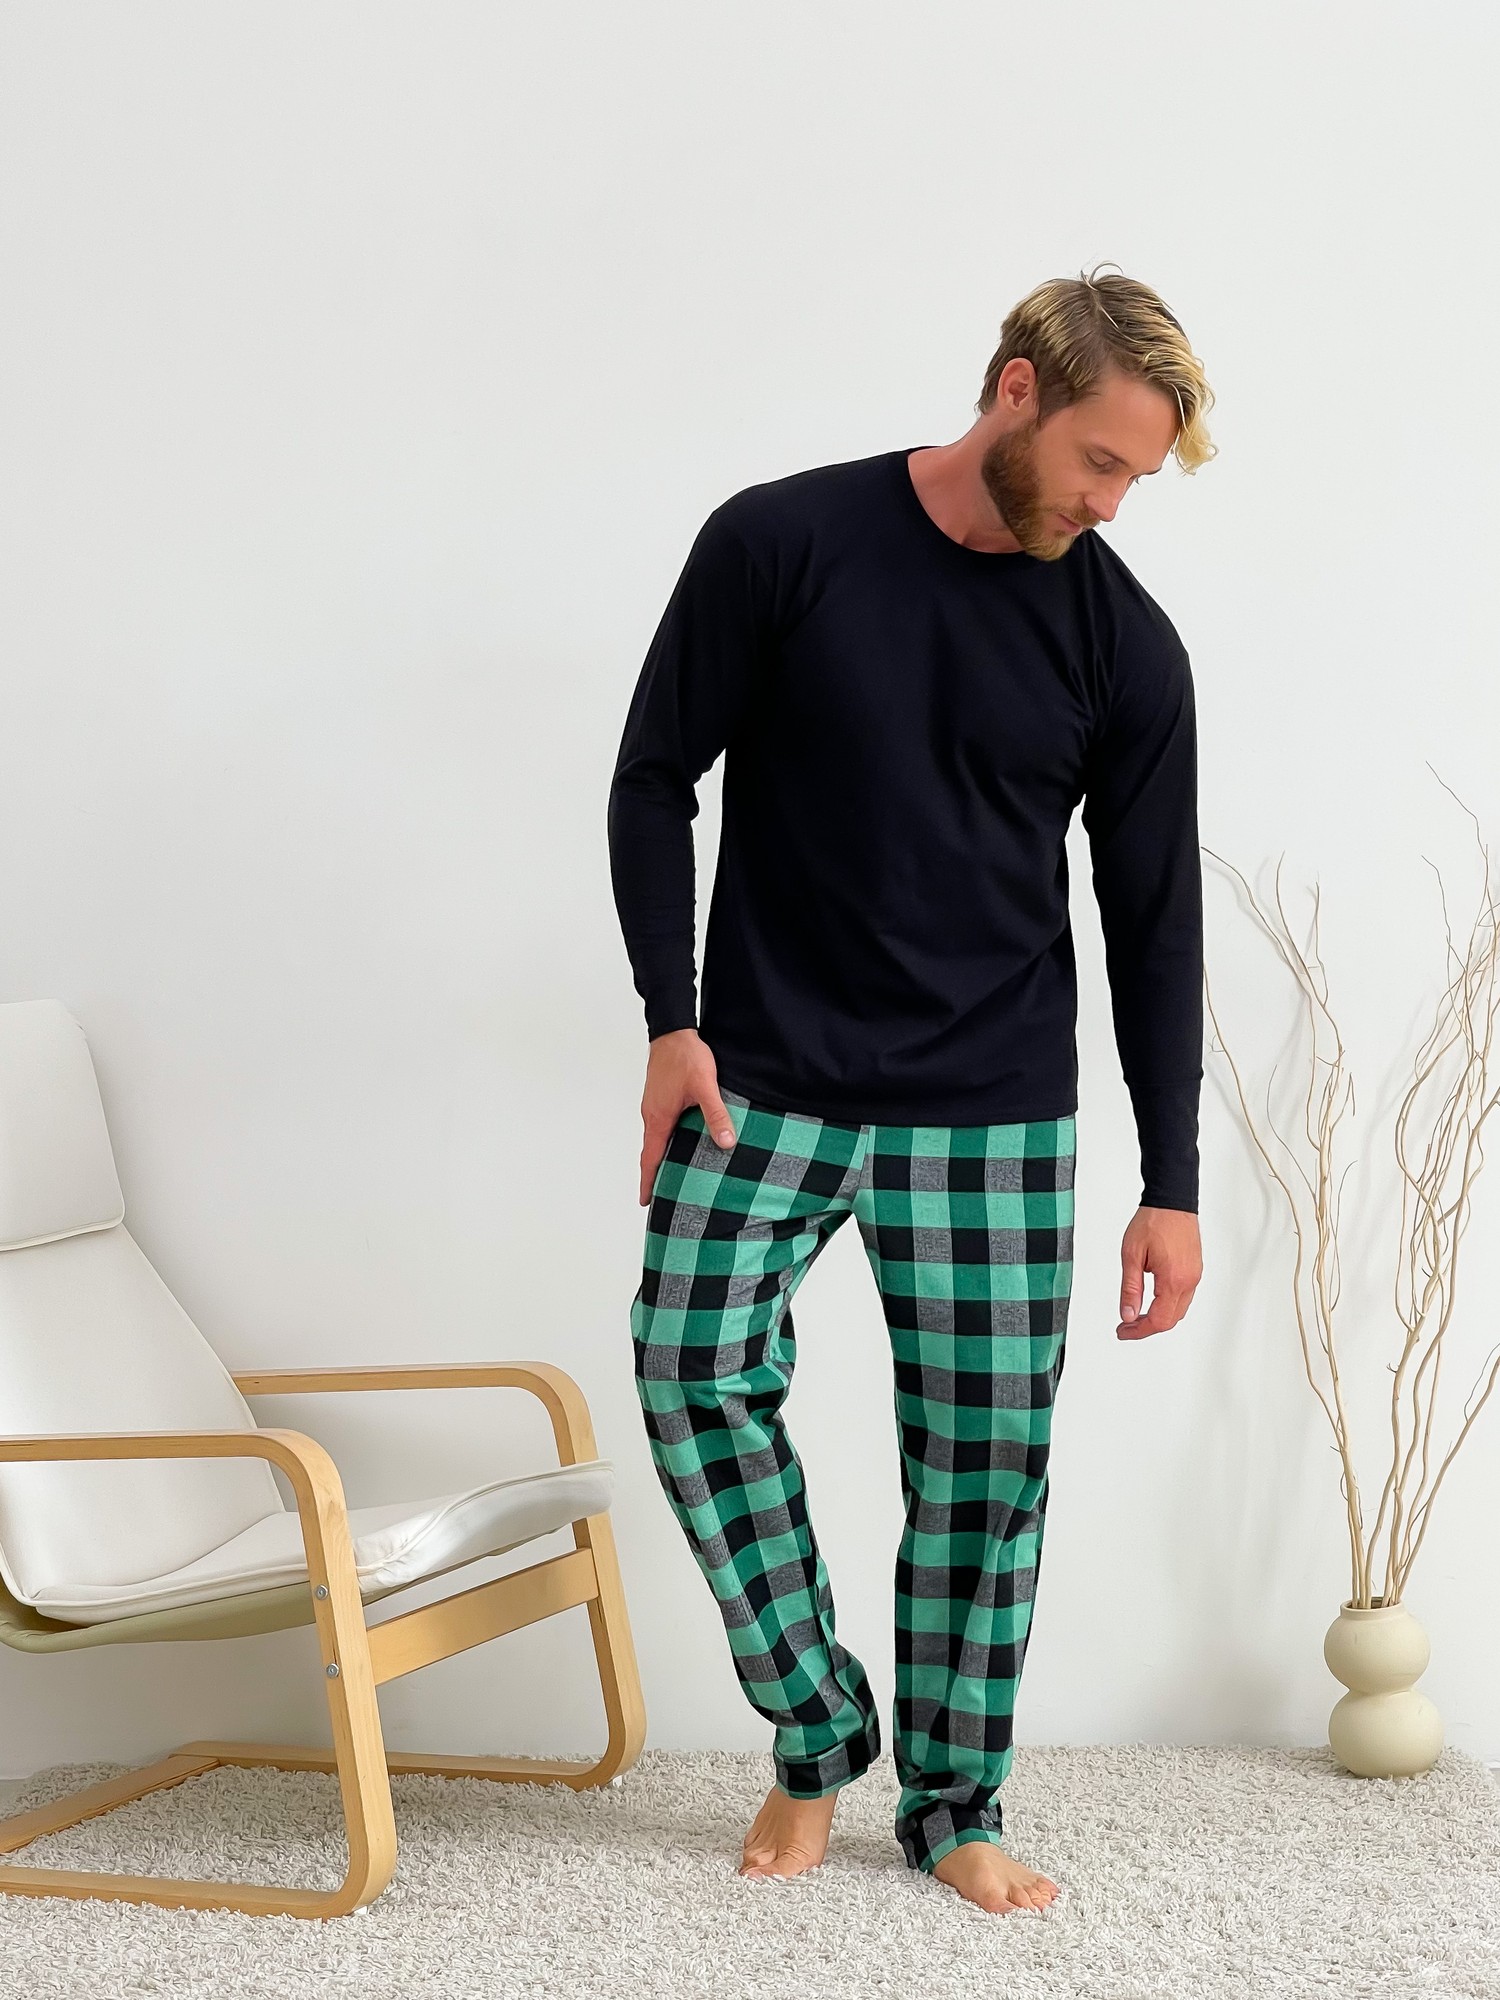 Home Pajamas for Men COZY Flannel Home Suit (Pants+Longsleeve) Green/Black F200P+L02